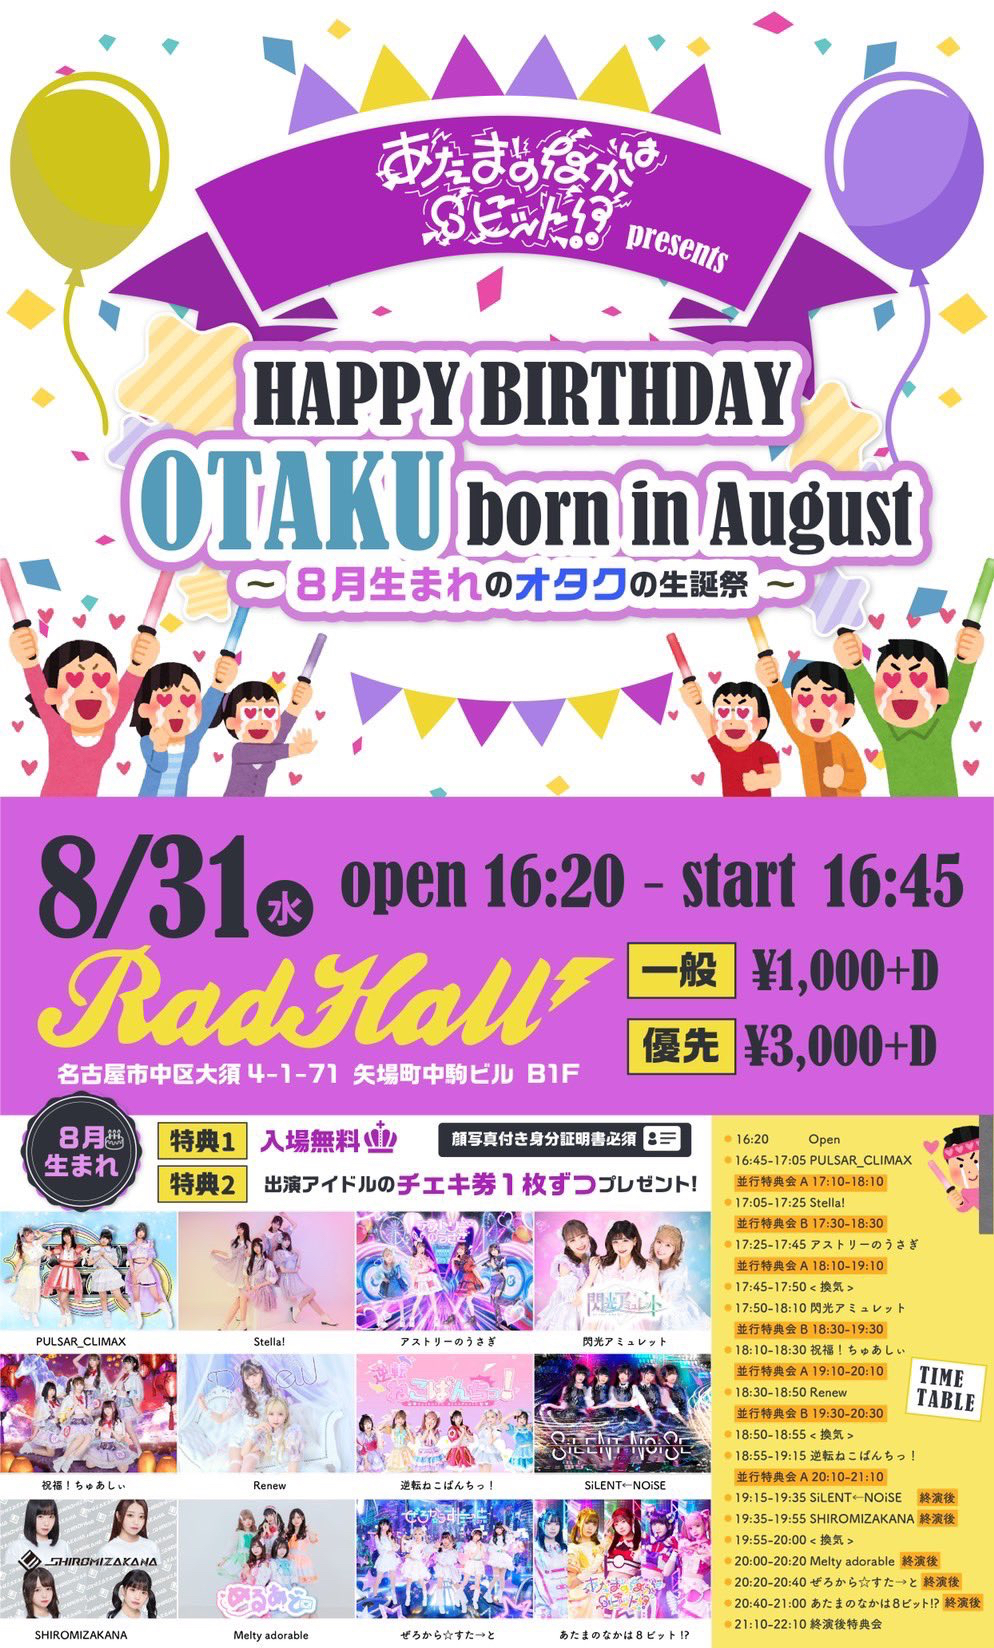 HAPPY BIRTHDAY OTAKU born in August